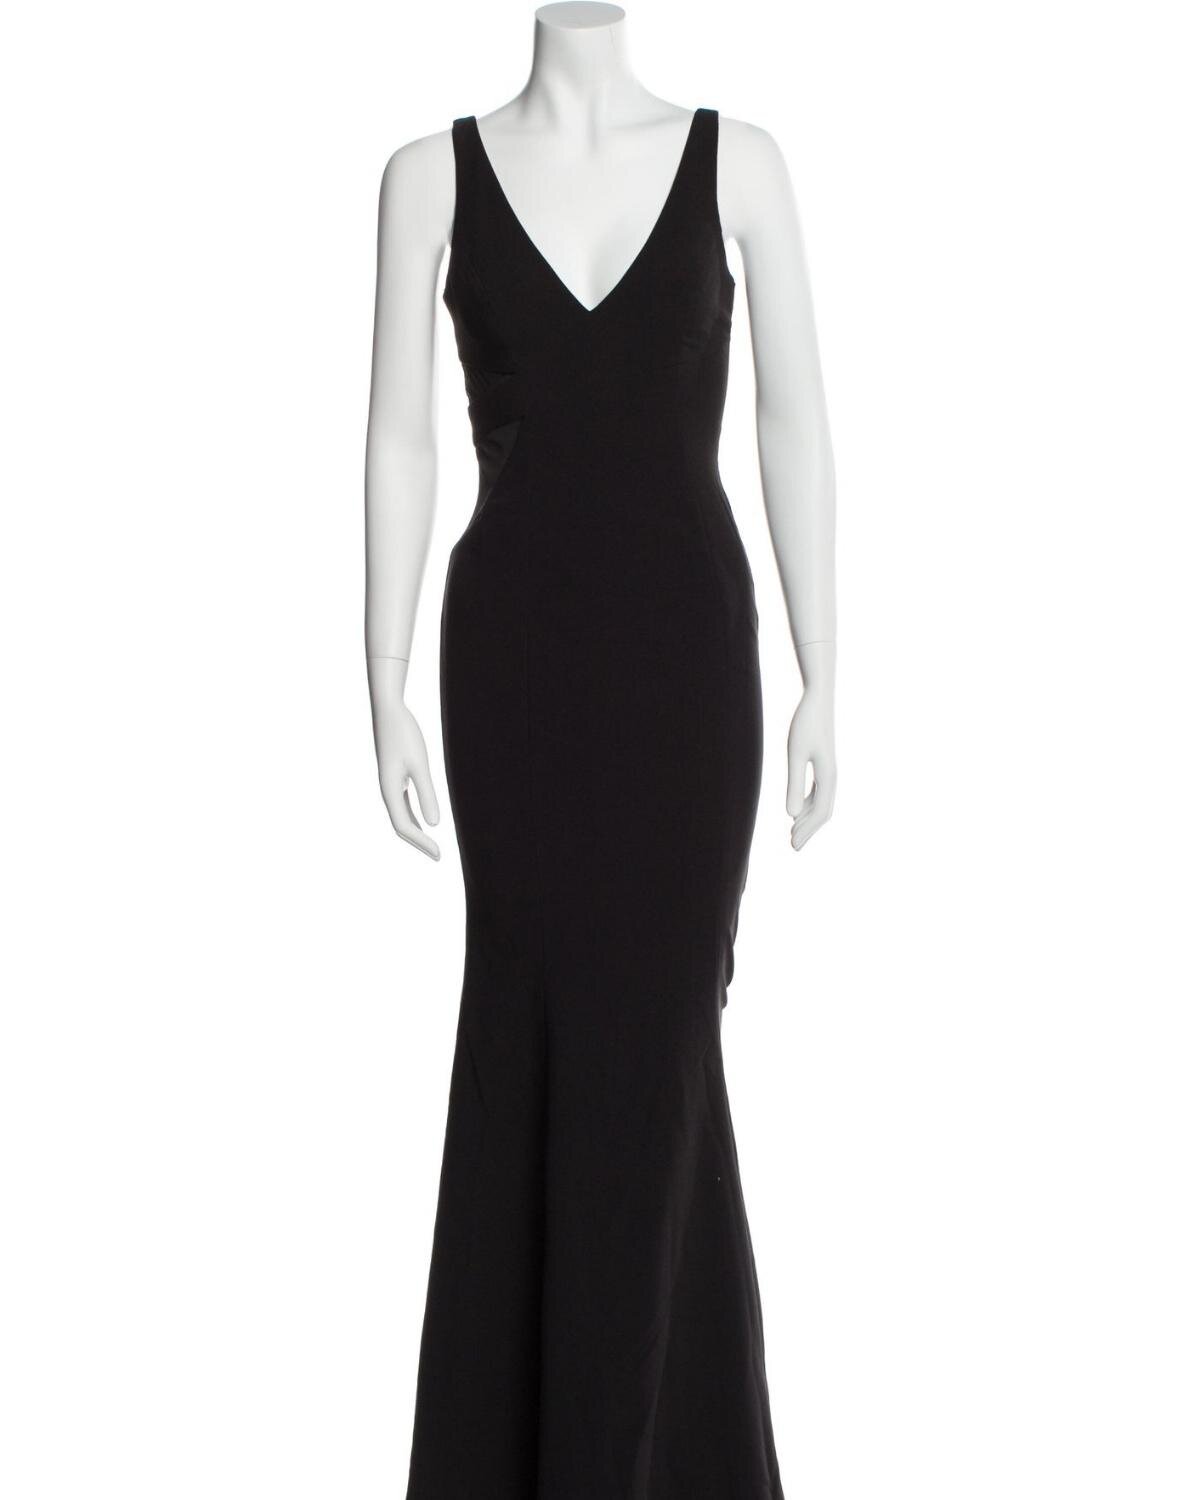 Top 91 about black formal dresses australia best  NEC